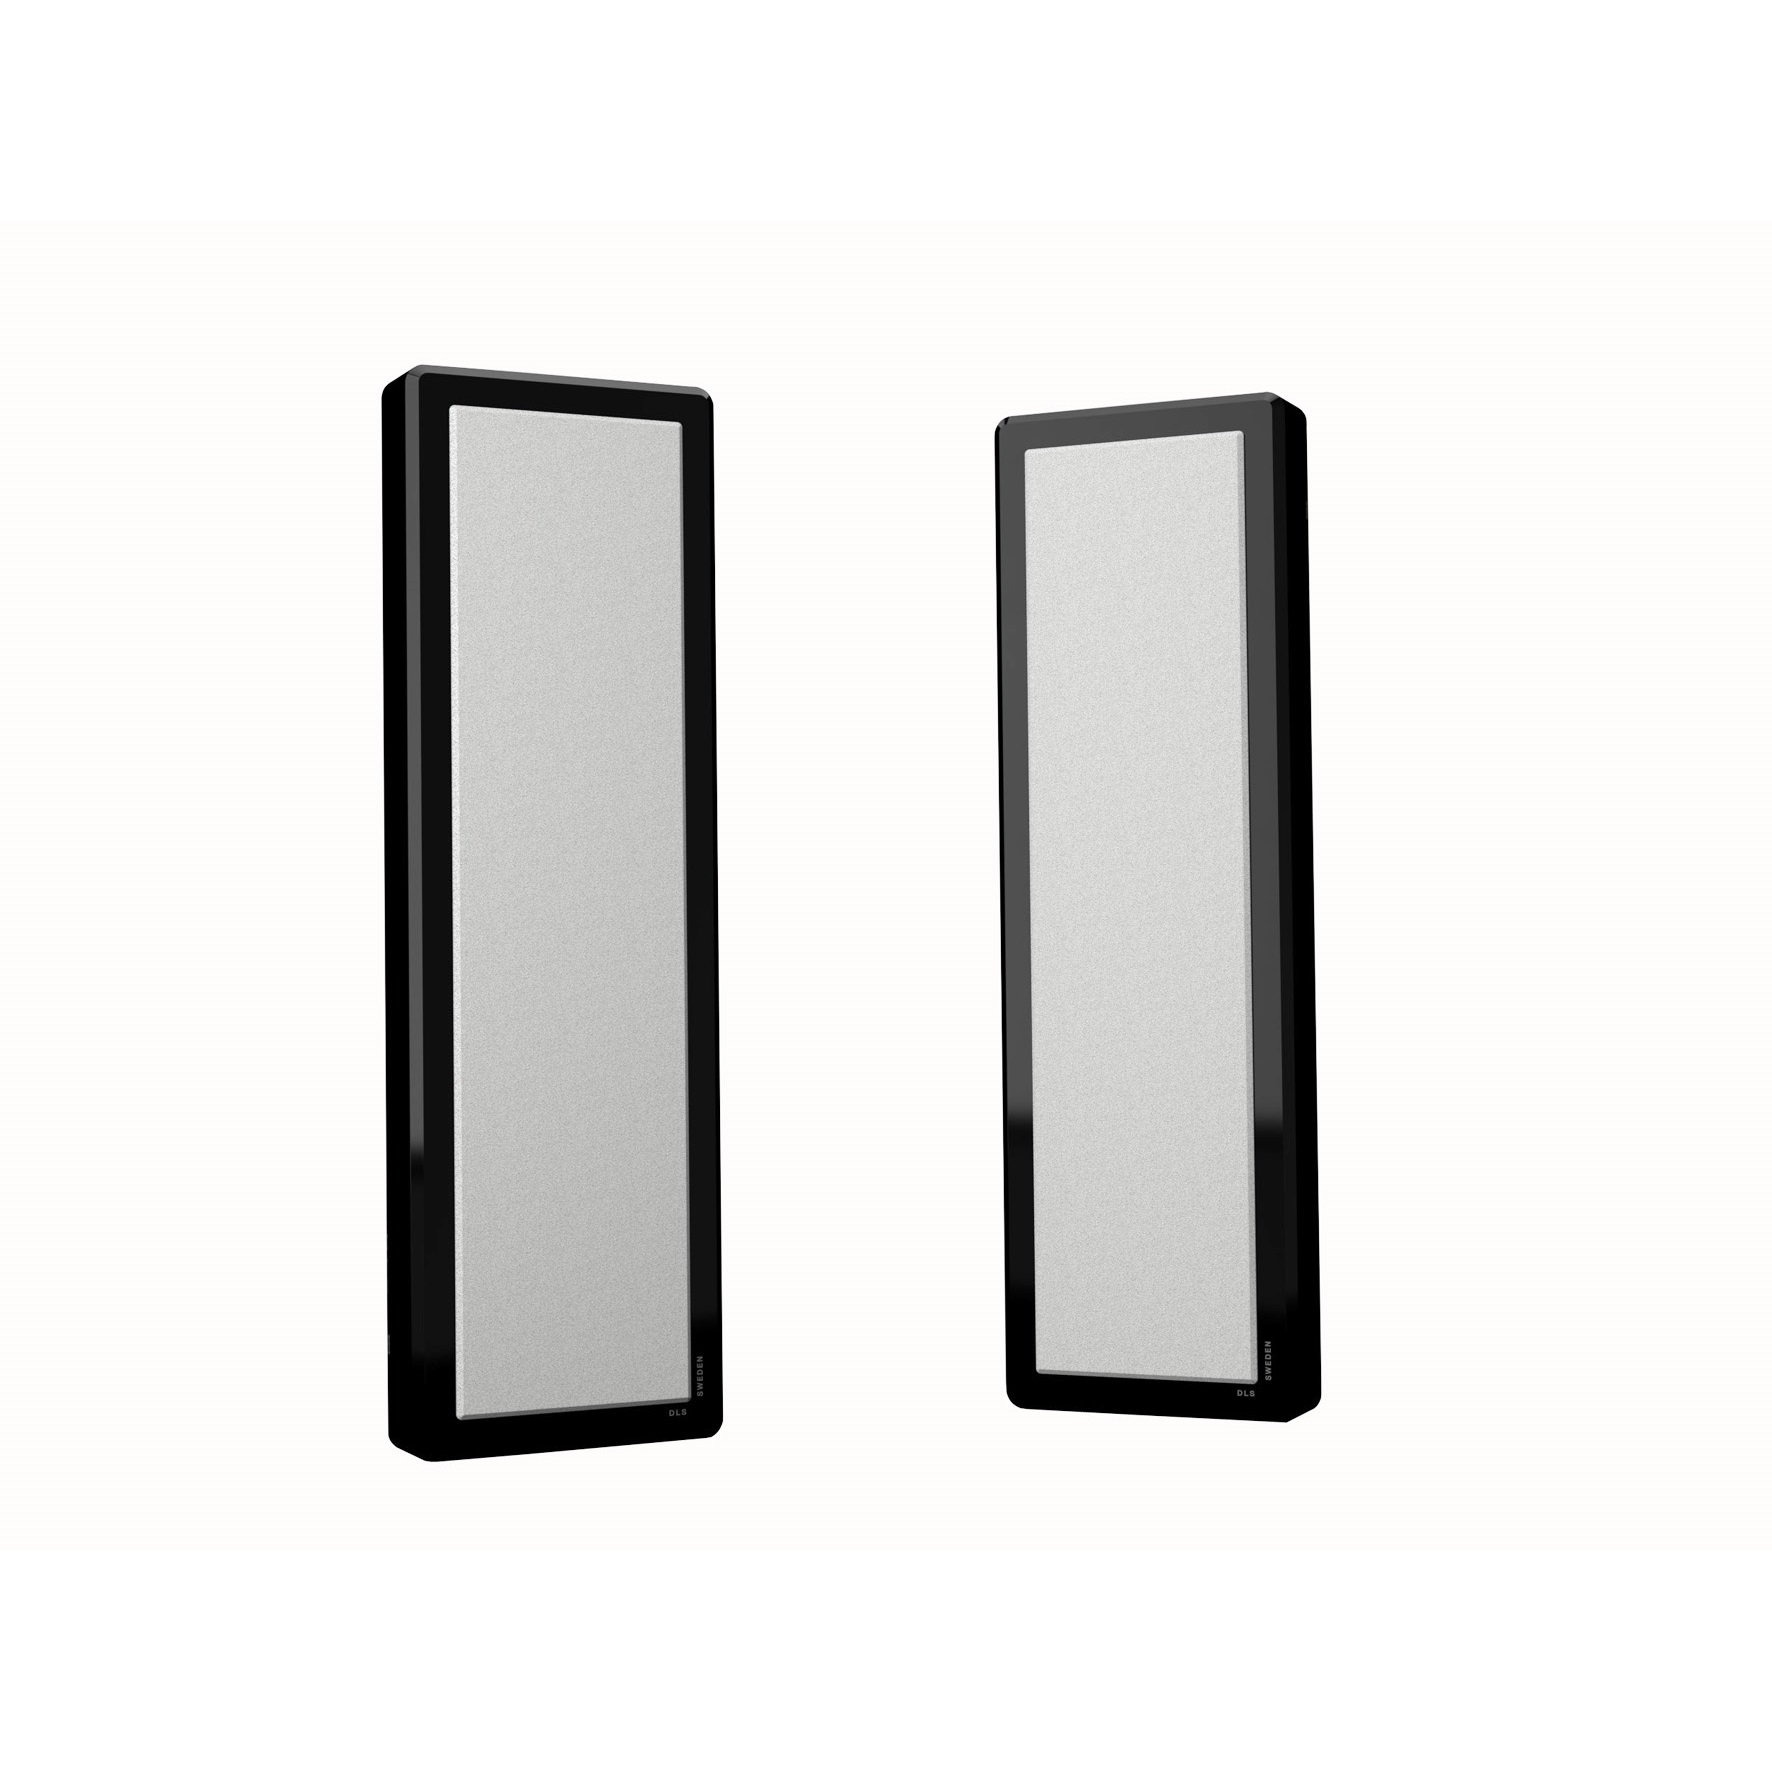 Настенная акустика DLS Flatbox M-Two black настенная акустика dls flatbox slim large v2 пара white